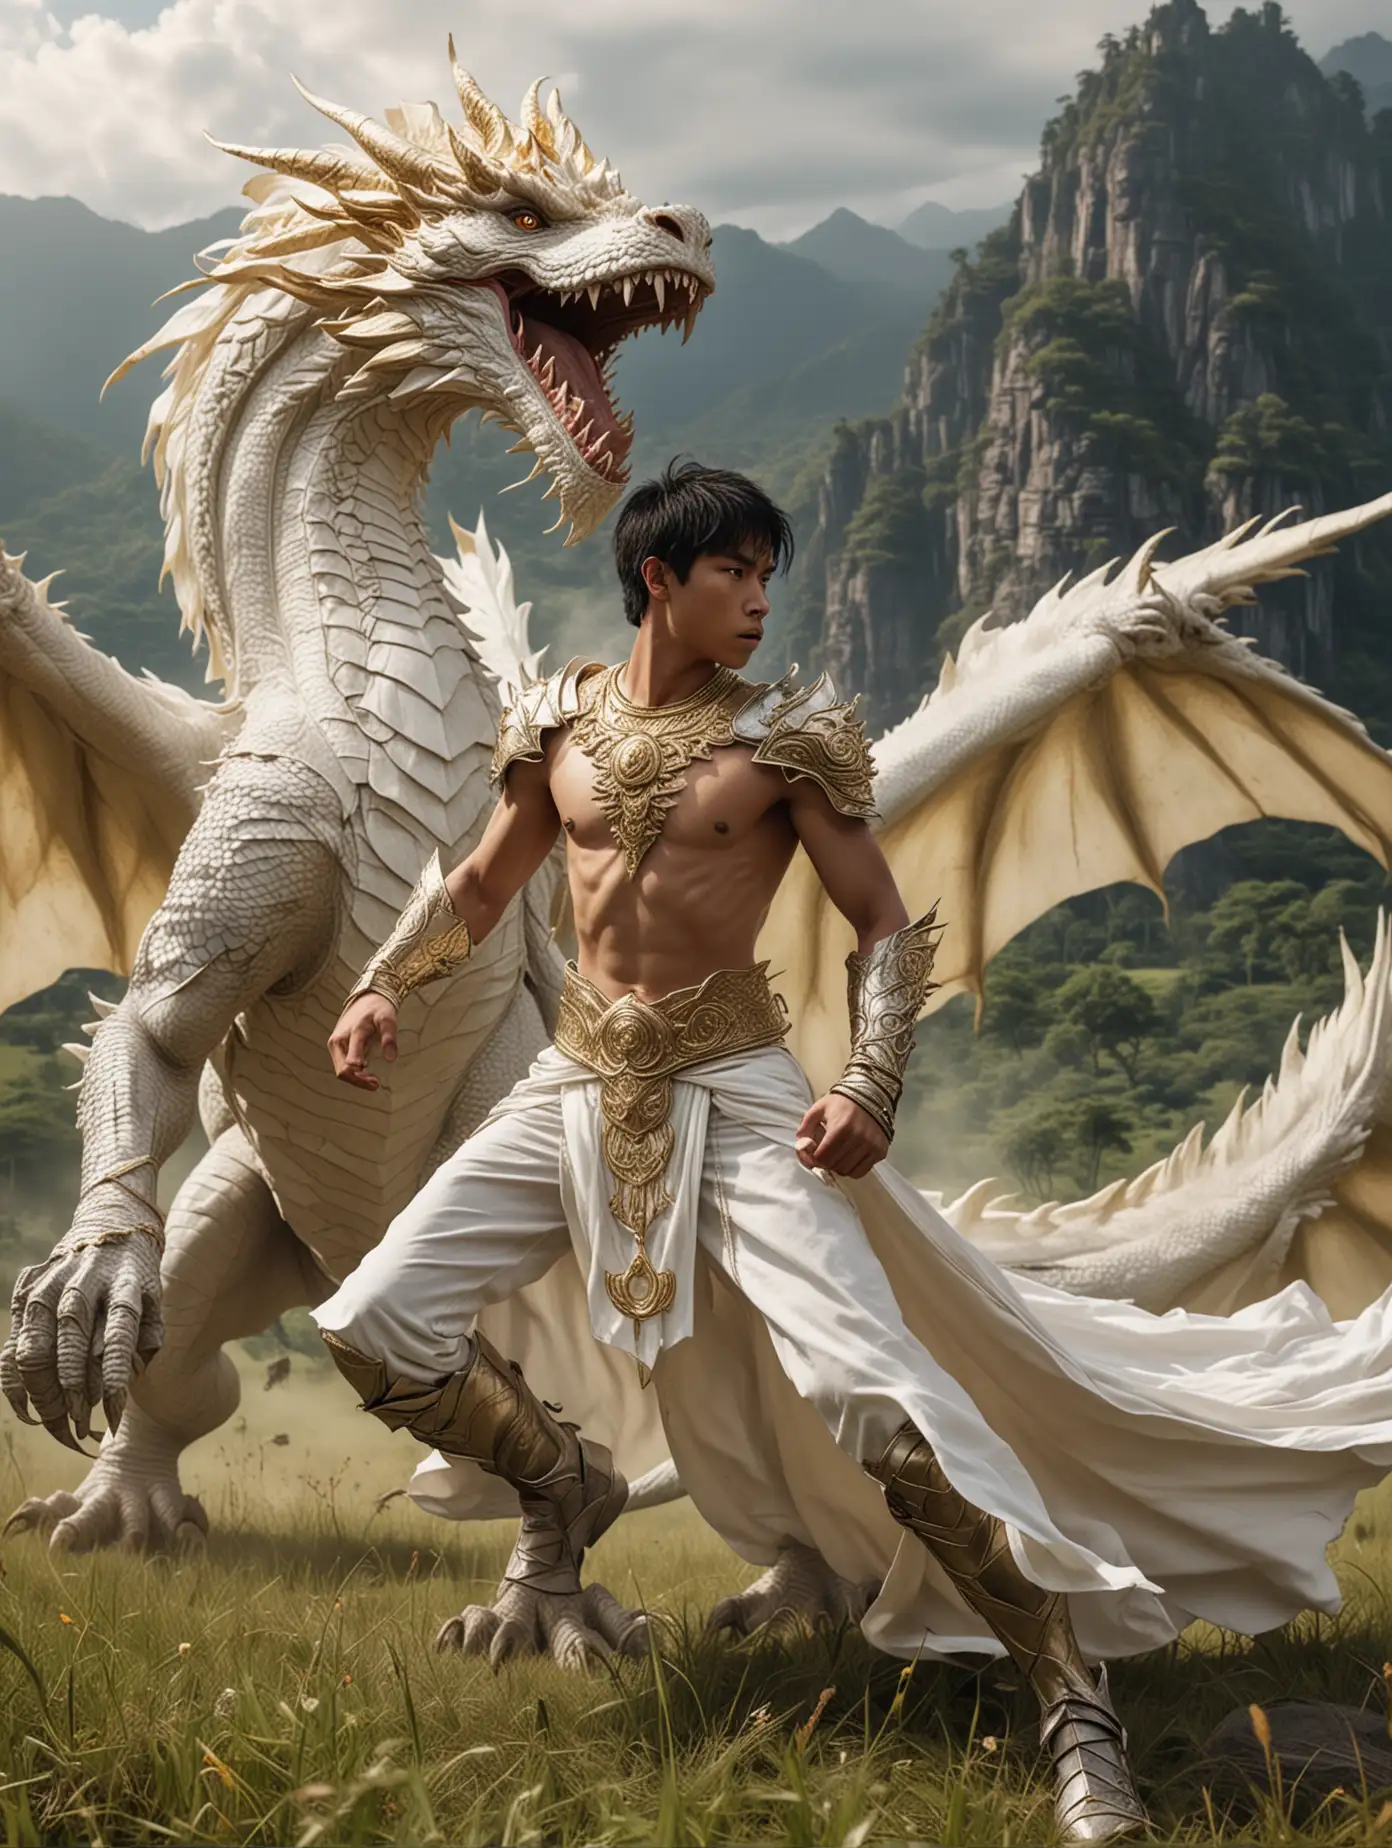 Indonesian-Teenage-Knight-Battles-Giant-Dragon-in-Grassland